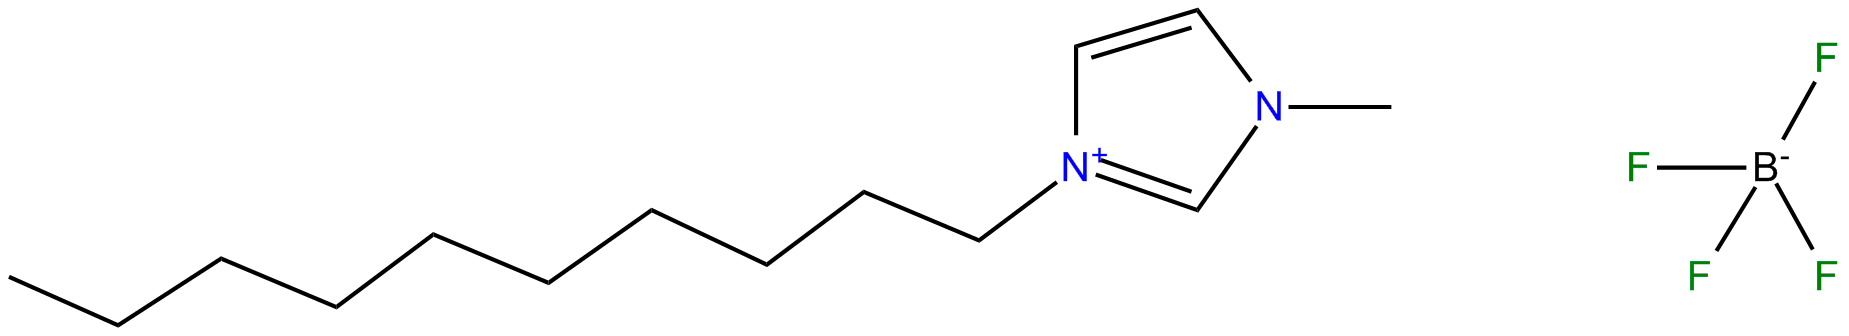 Image of 1-decyl-3-methylimidazolium tetrafluoroborate